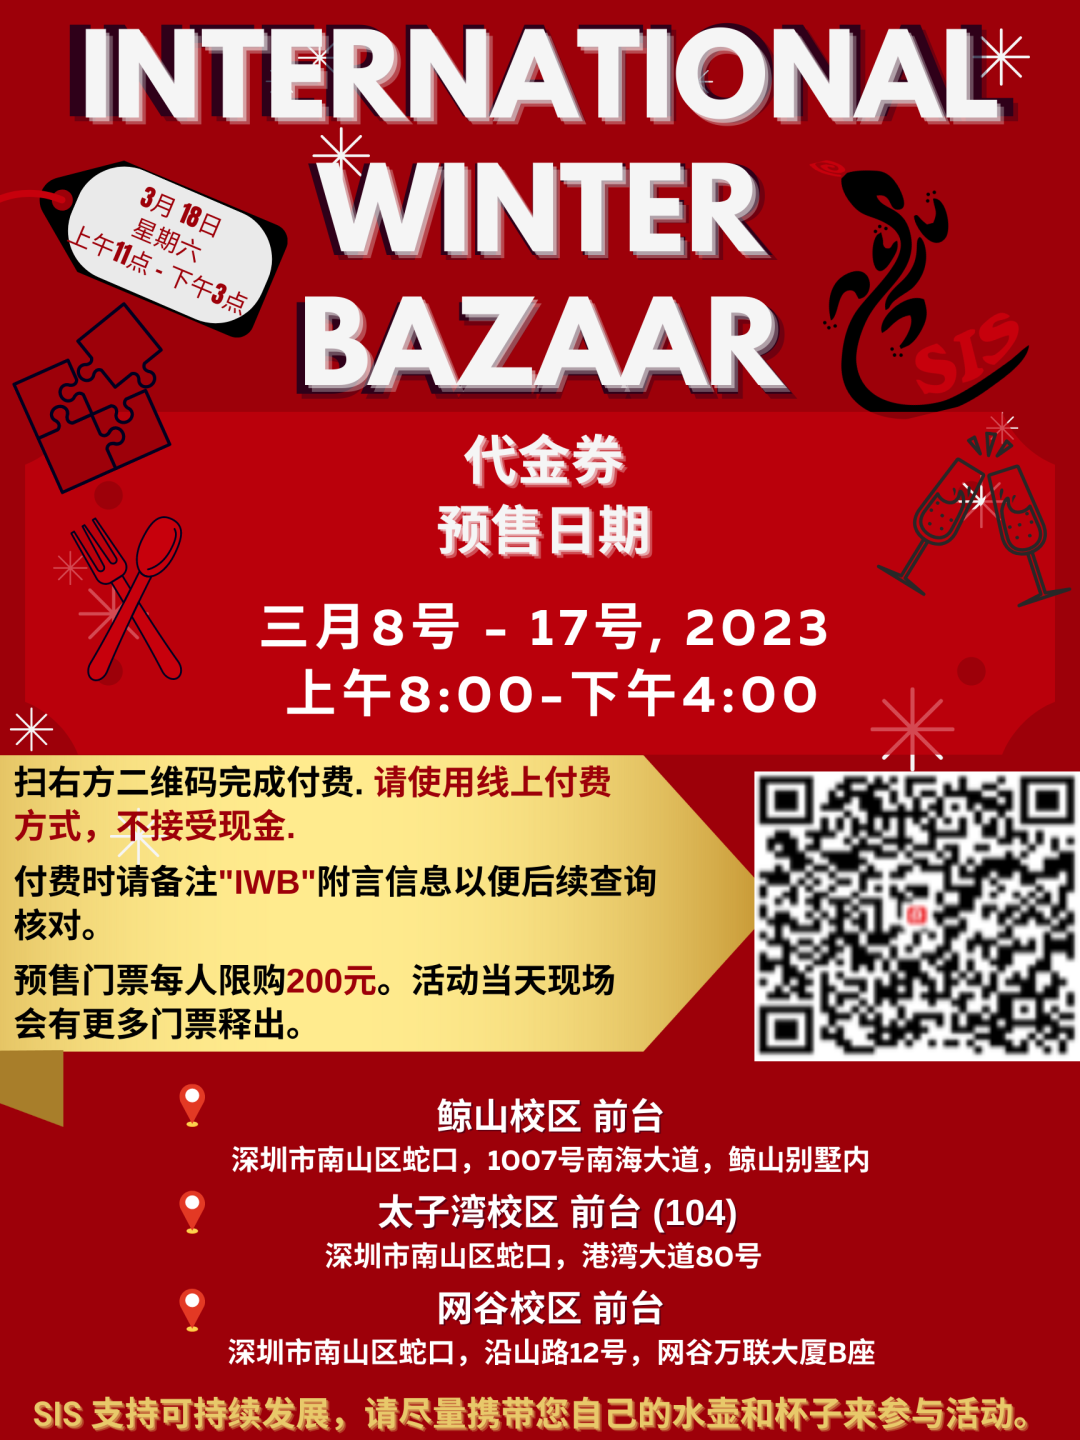 This Saturday! SIS International Winter Bazaar 国际冬日集市本周六来啦！